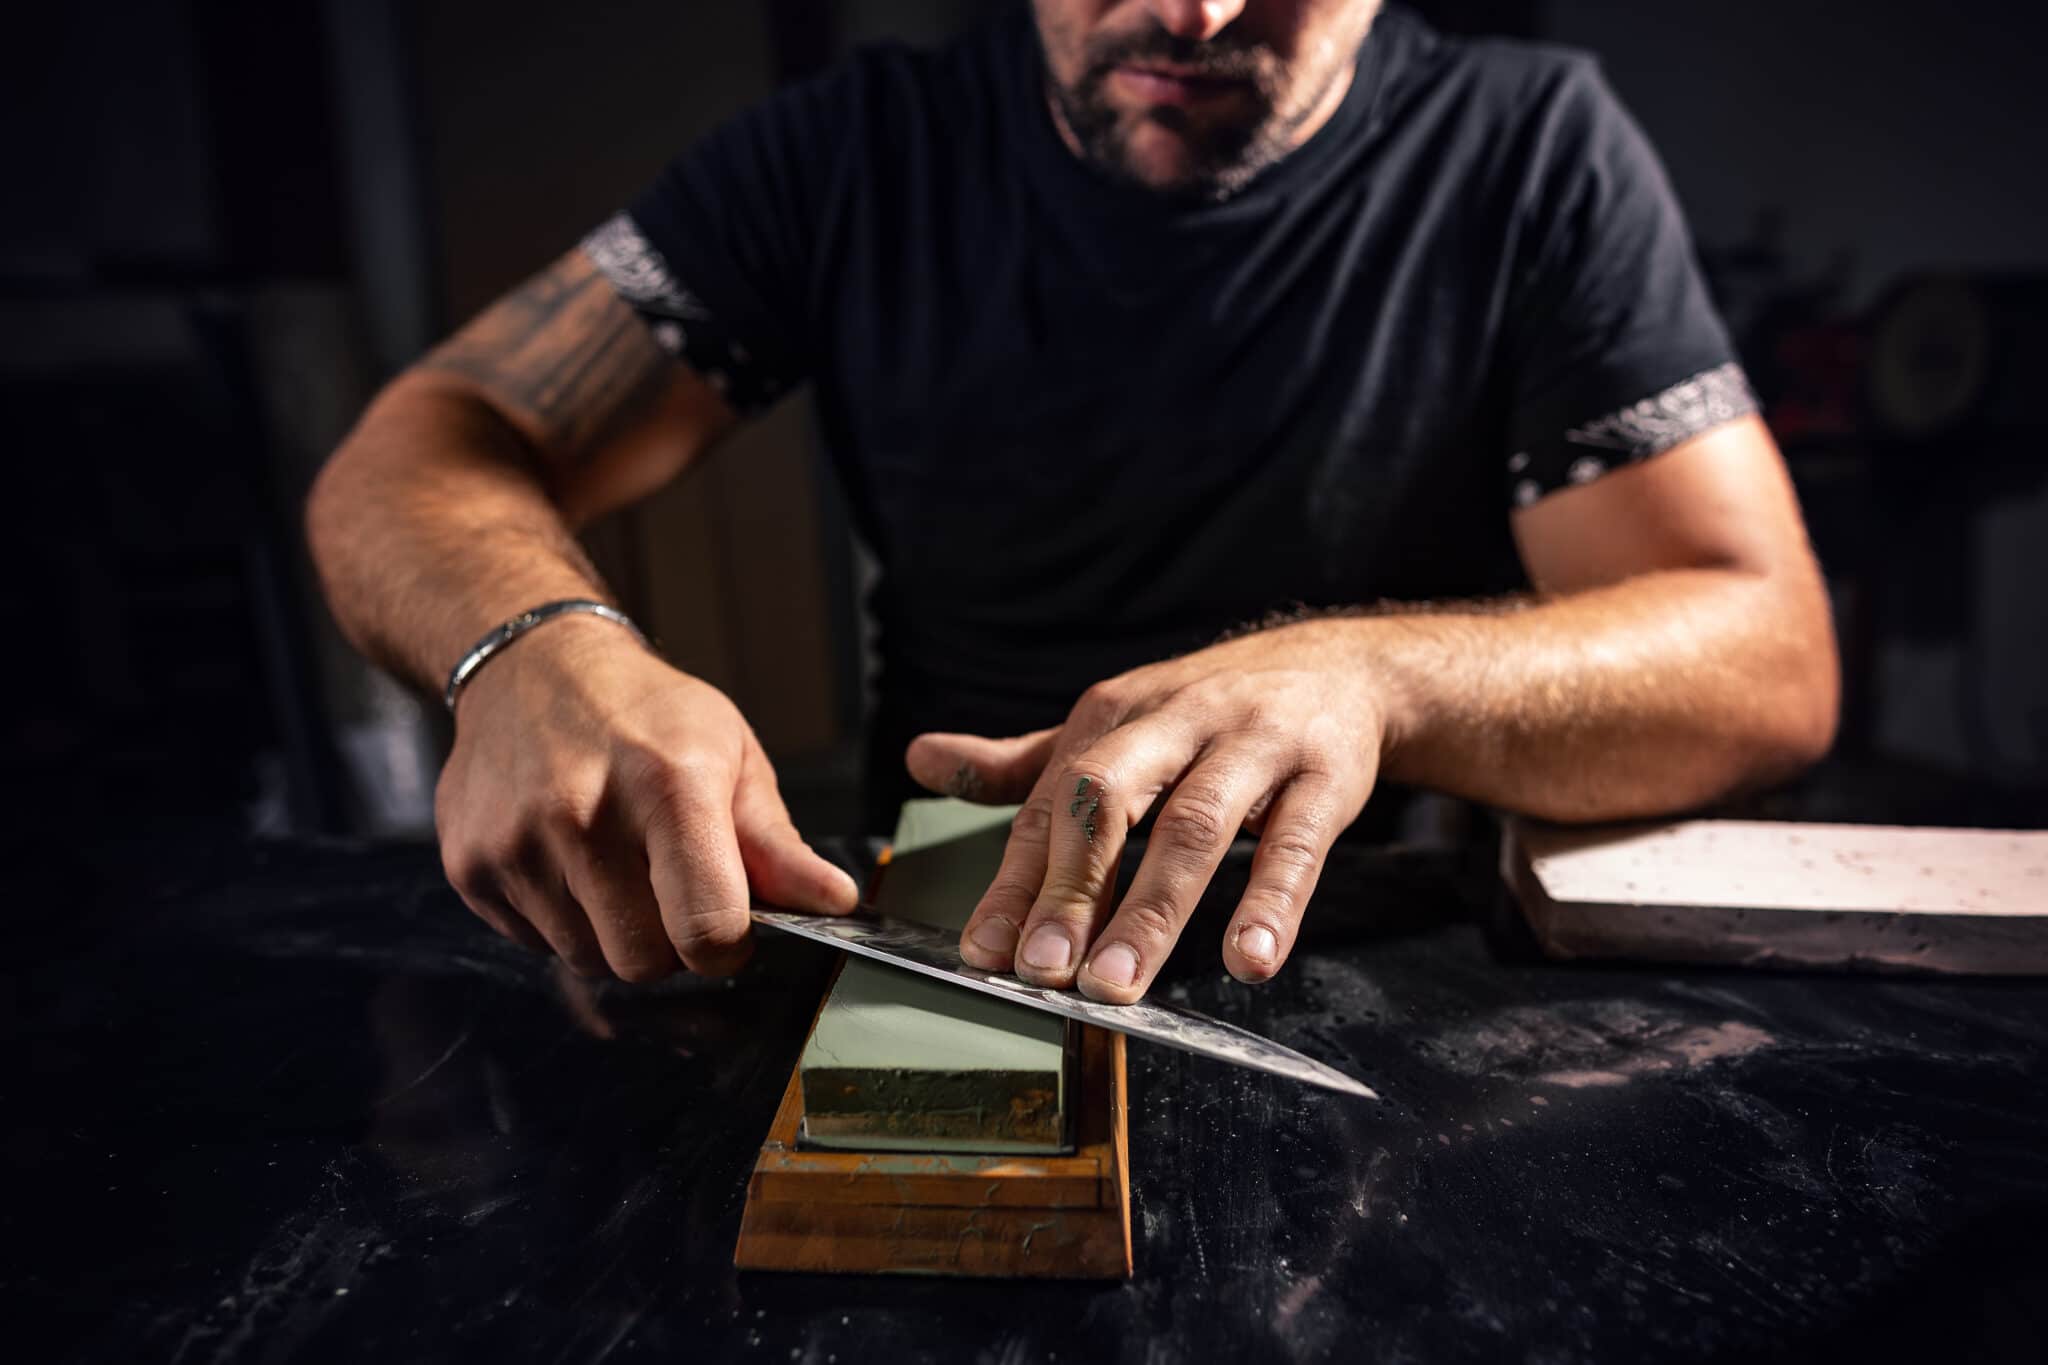 The man using whetstone to sharpening chef knife